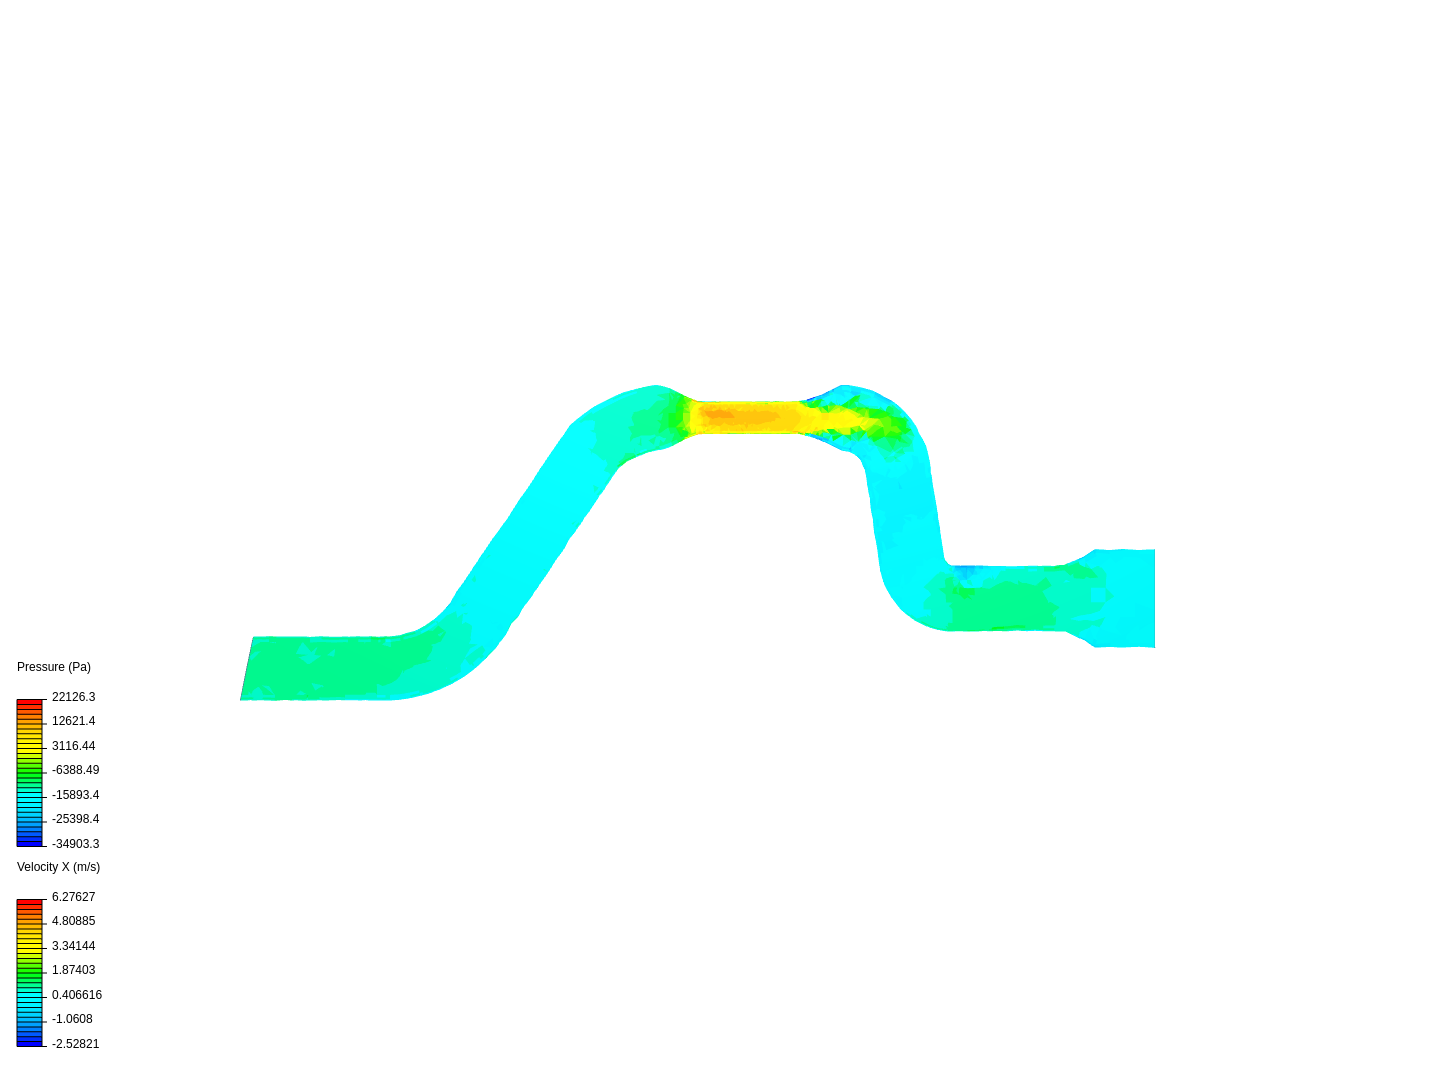 bernoulli_simulation image